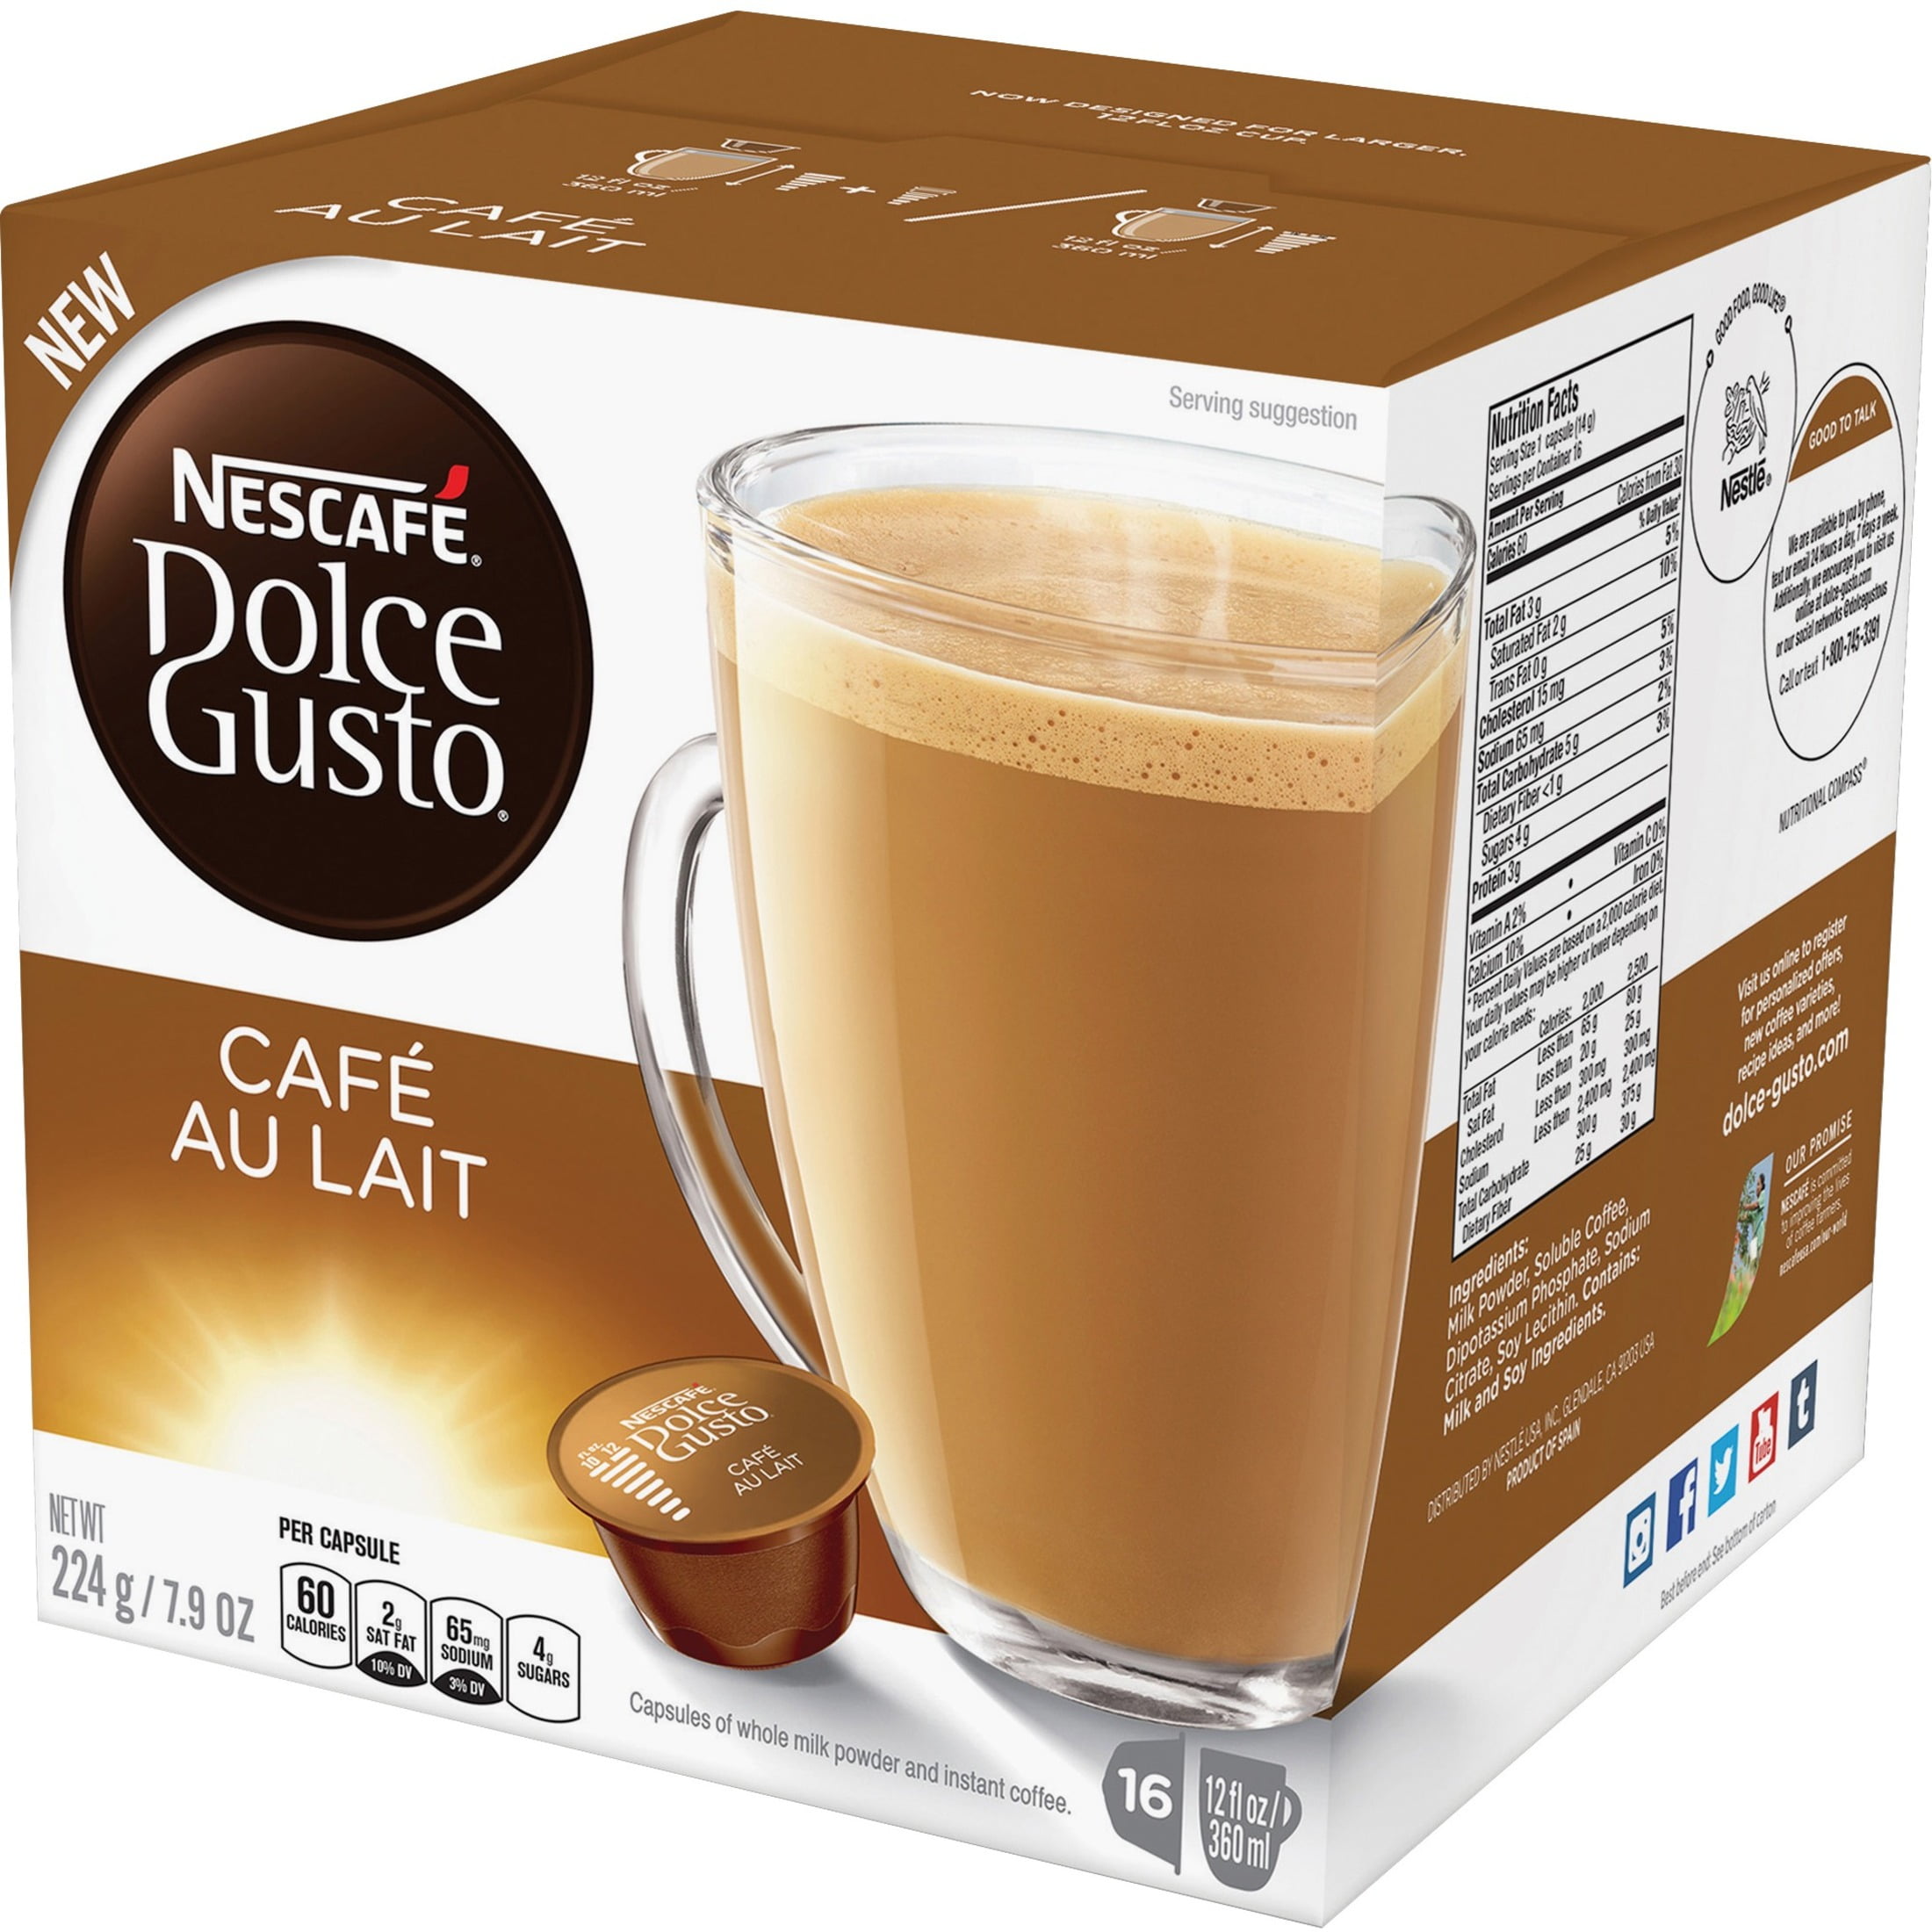 1 x Nescafe Dolce Gusto Cafe Au Lait